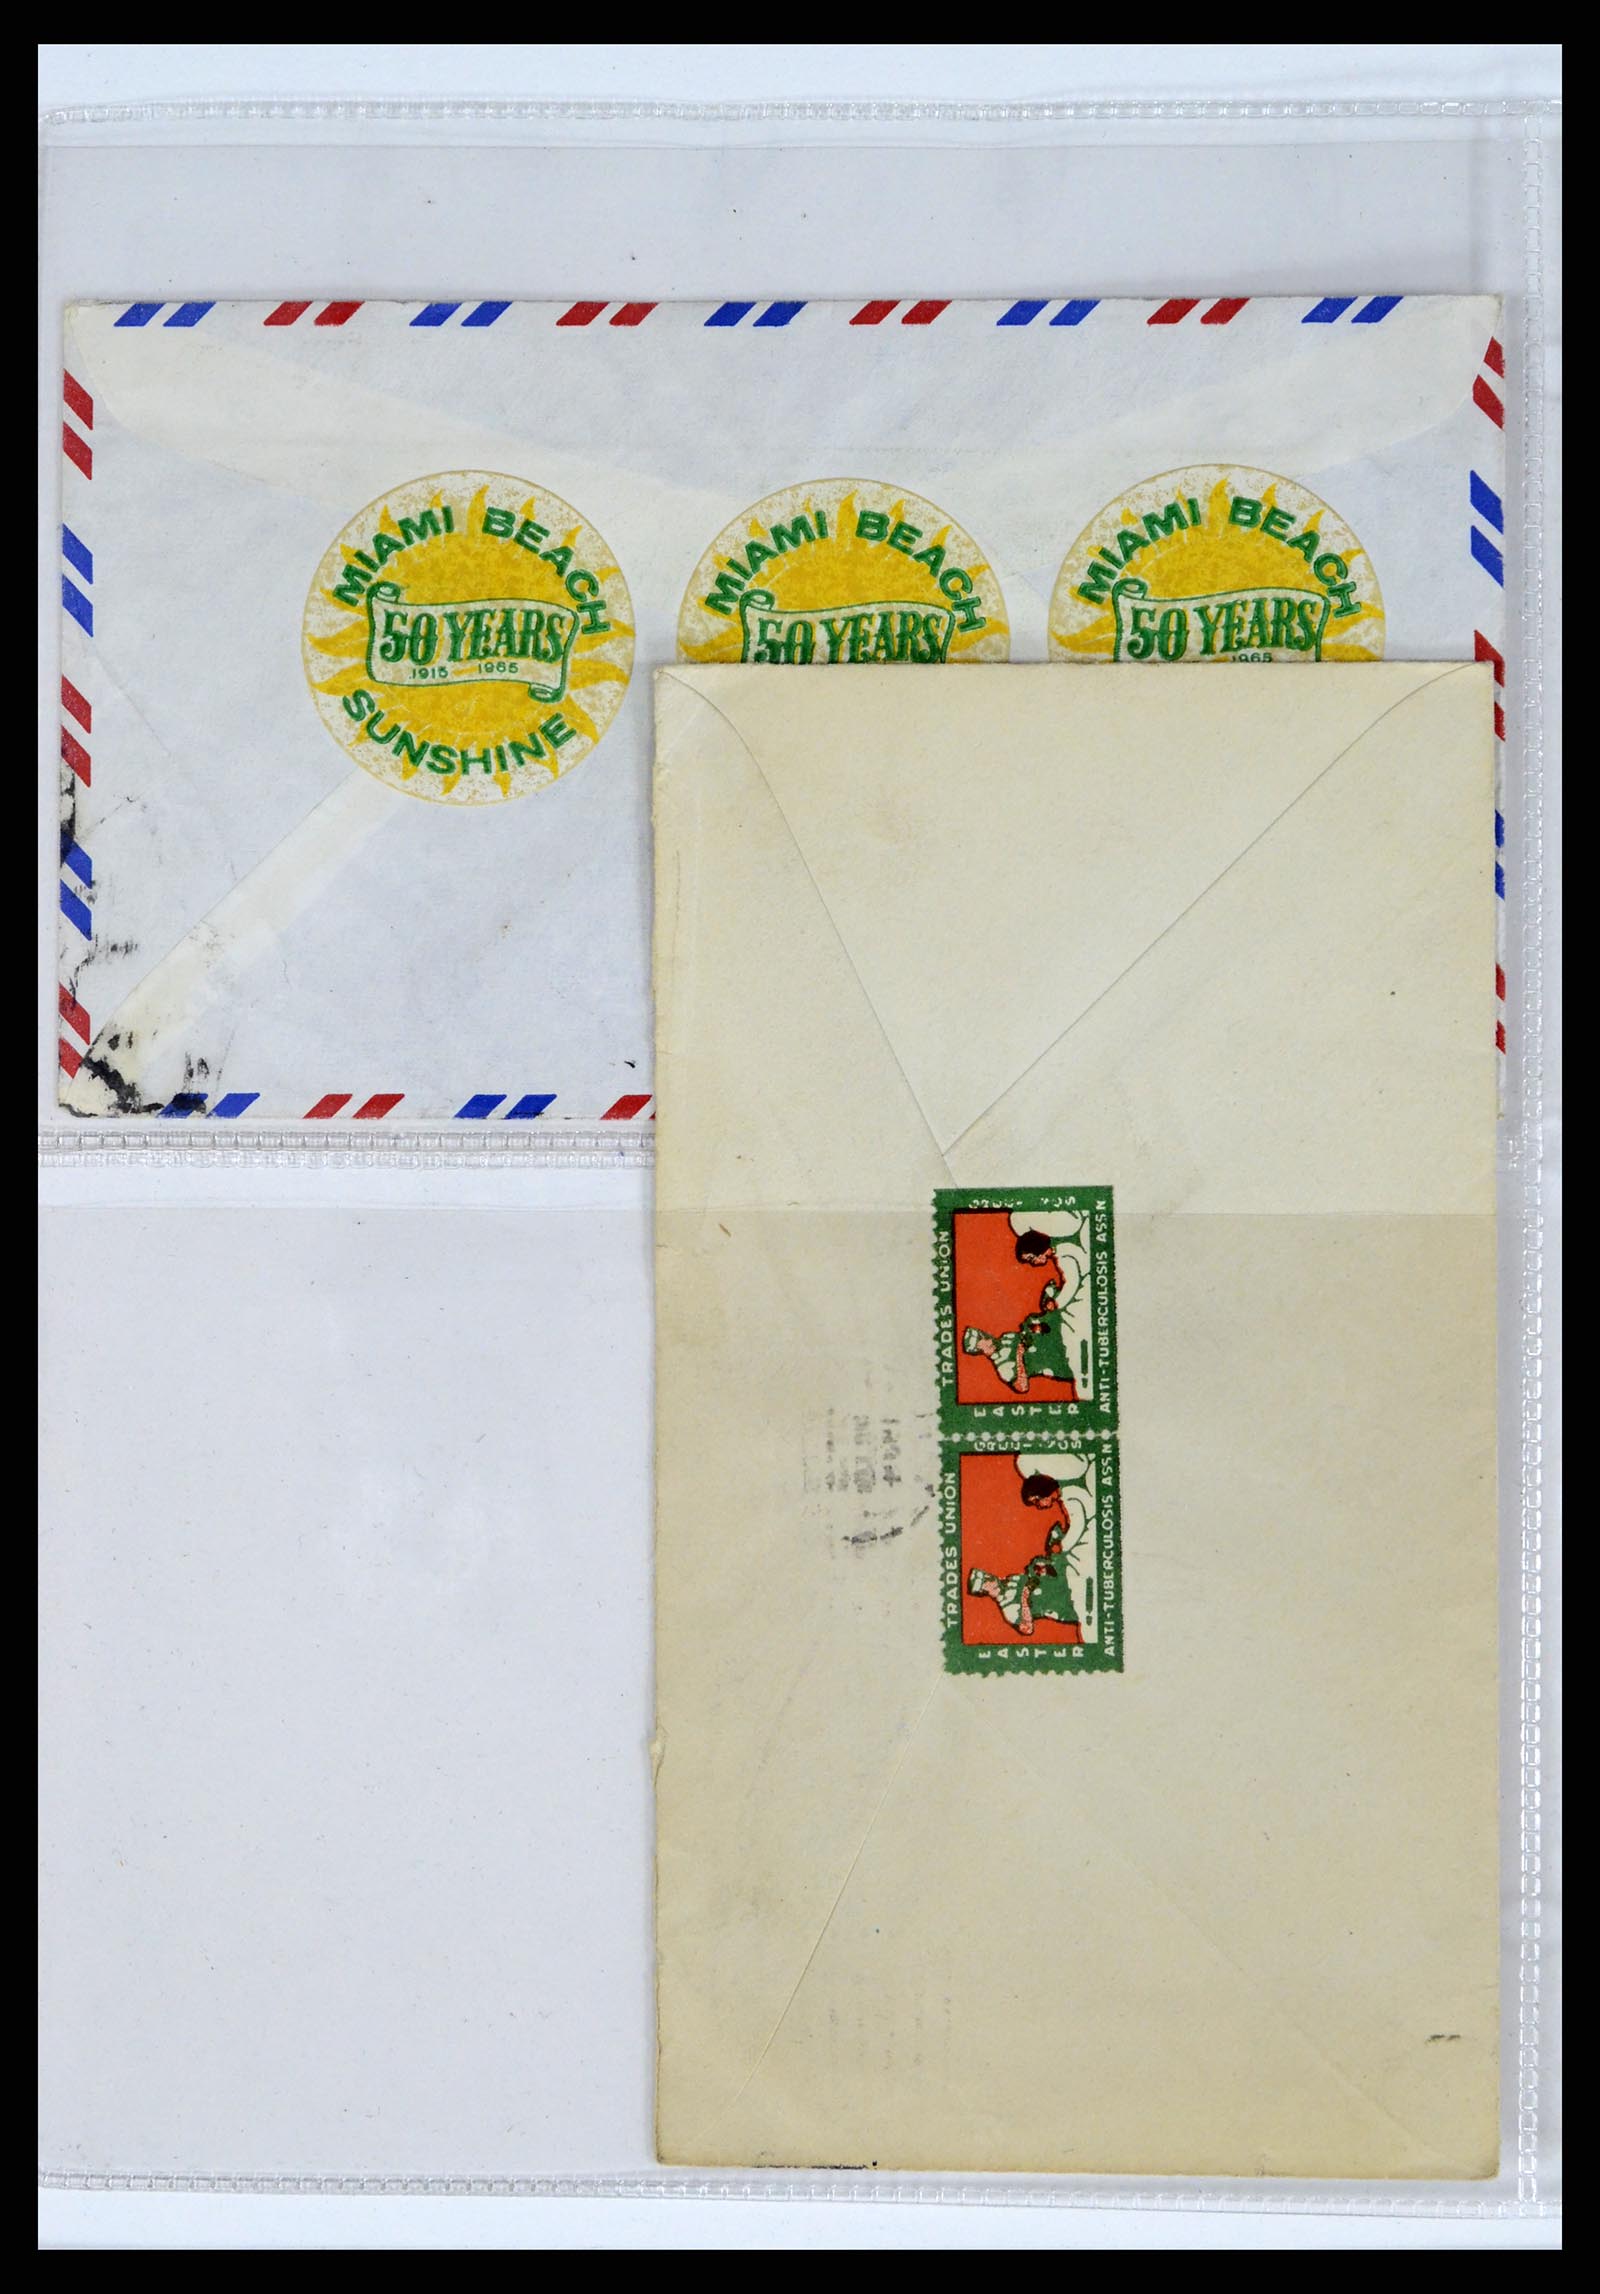 37668 247 - Stamp collection 37668 USA Christmas seals on cover 1908-2009.